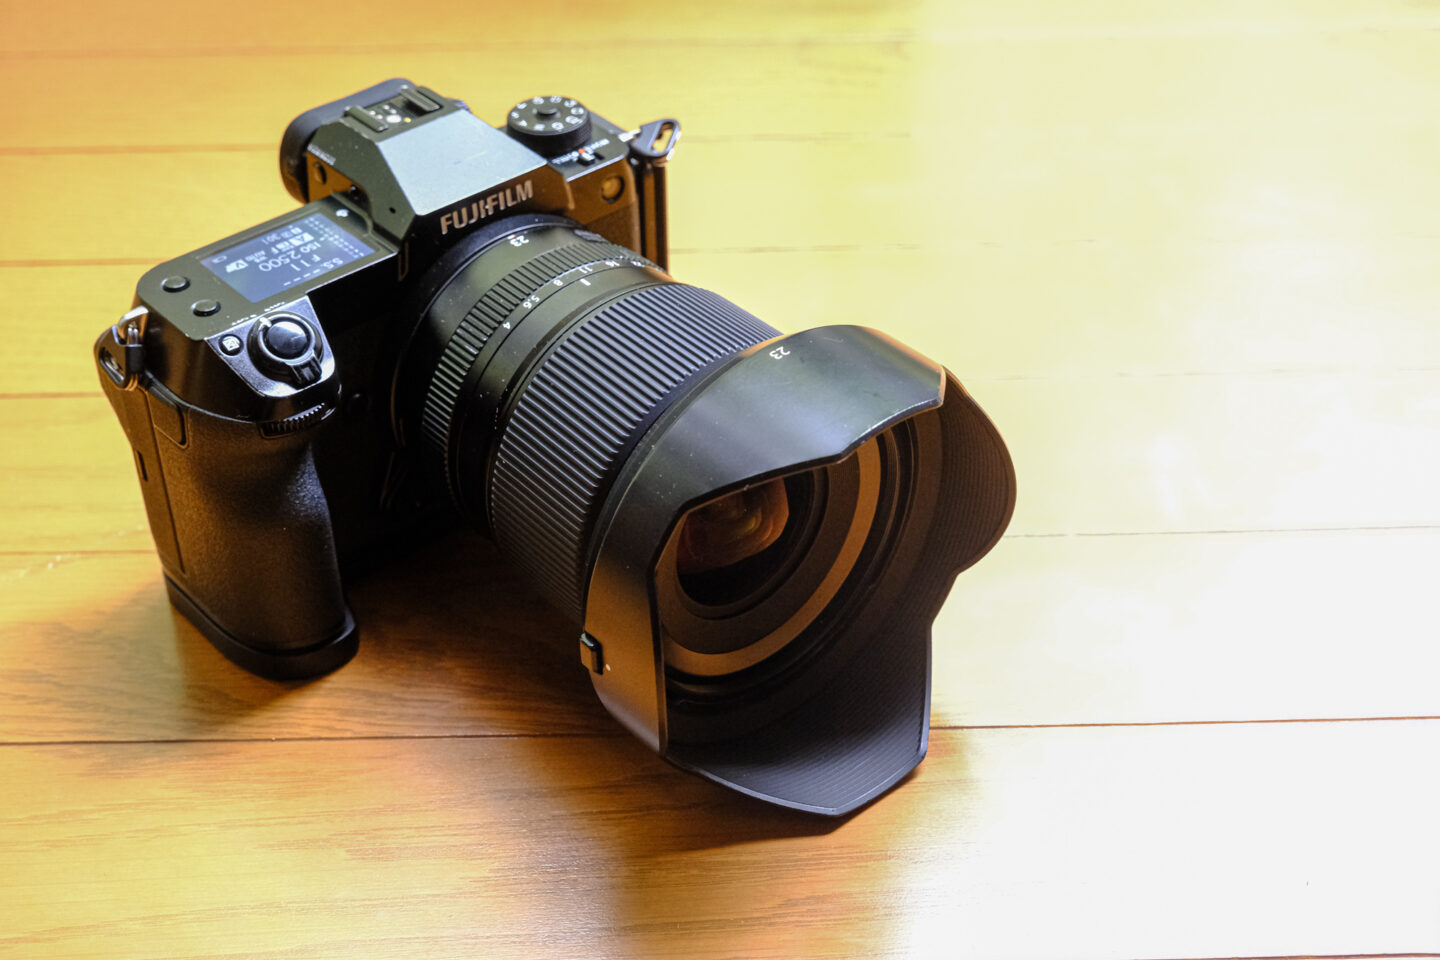 GFX用自作レンズ　60mm　F12.3　(もとはチェキ)